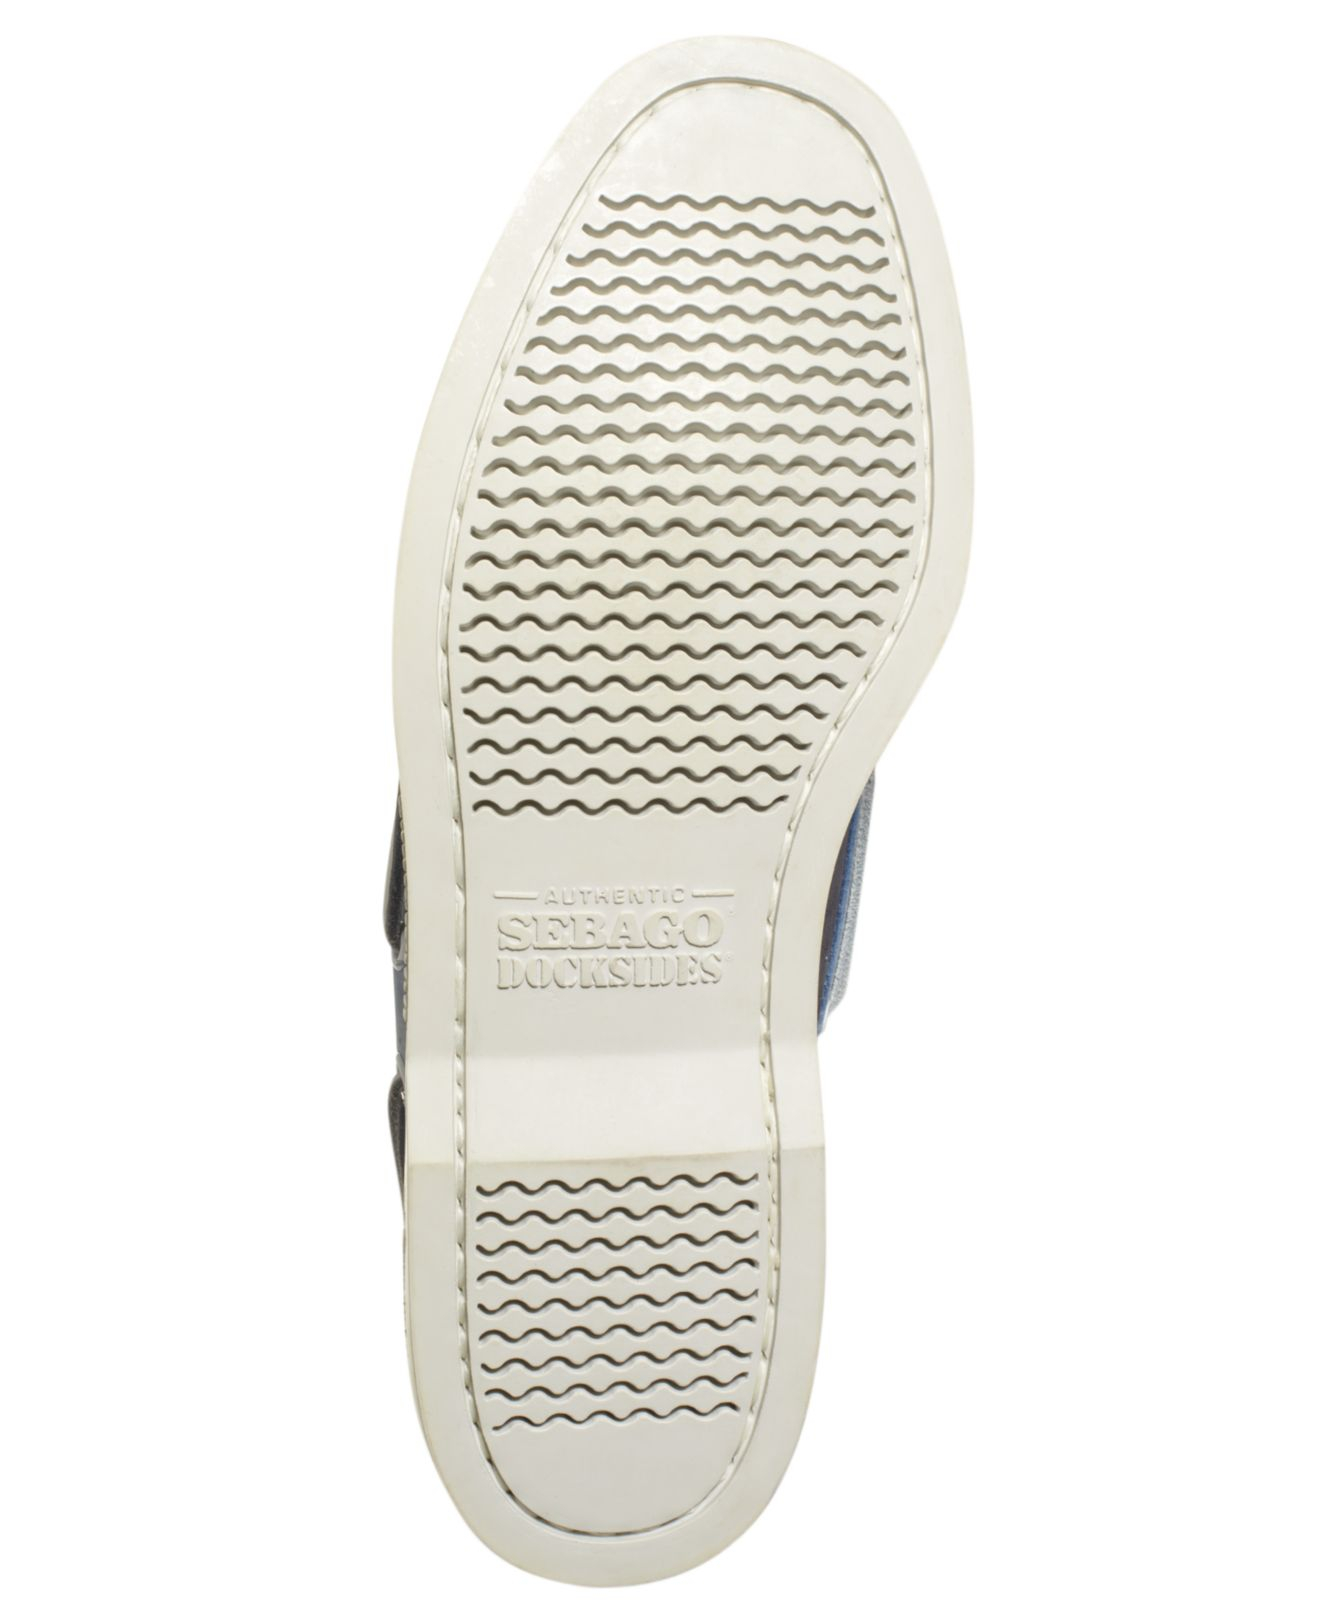 Sebago Spinnaker Tri-Tone Boat Shoes in Chalk Blue (White) for Men - Lyst